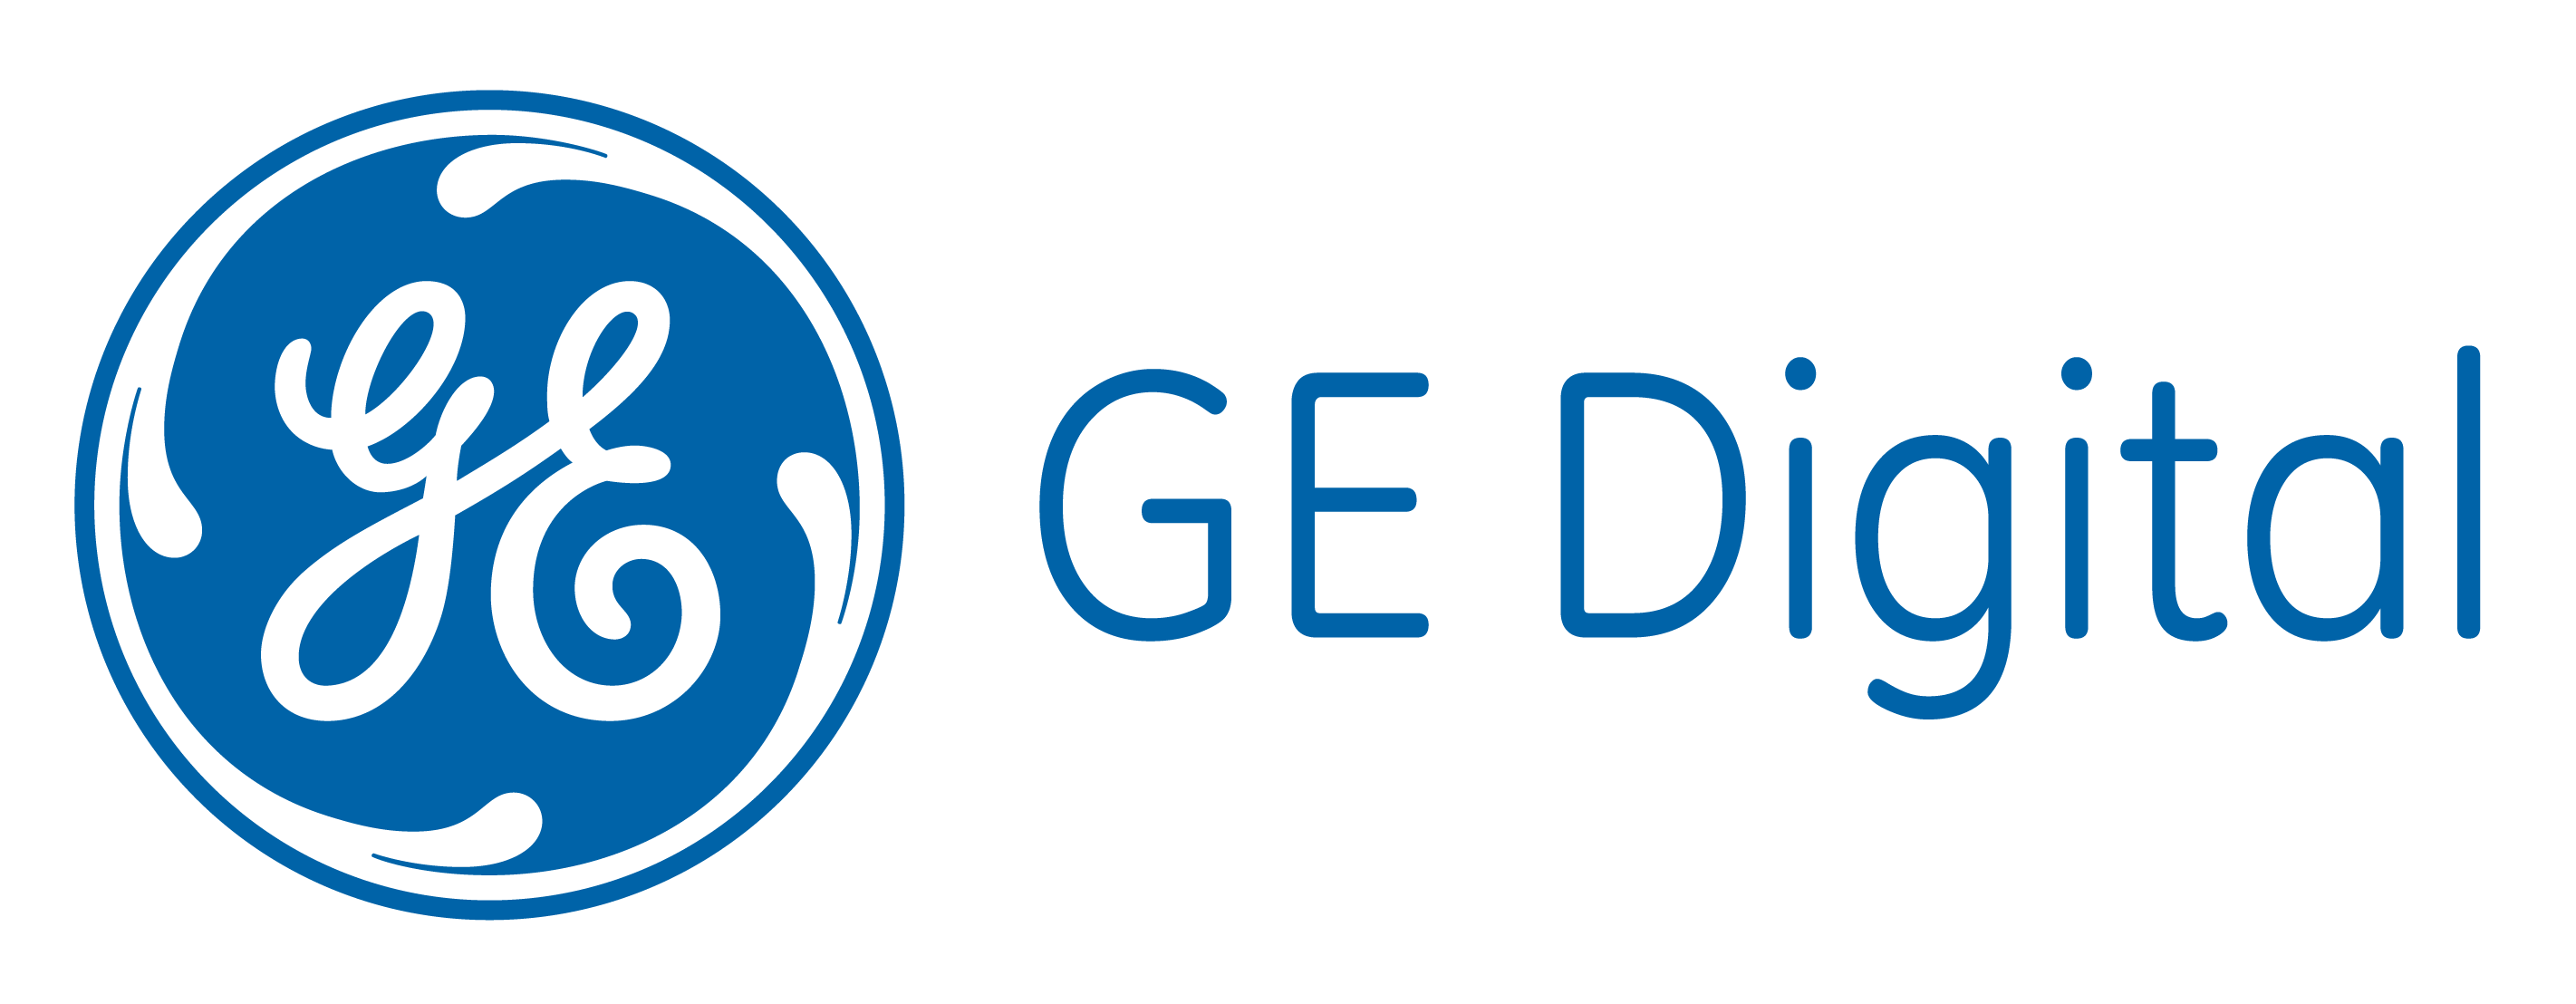 General Electric Canada - GE Digital